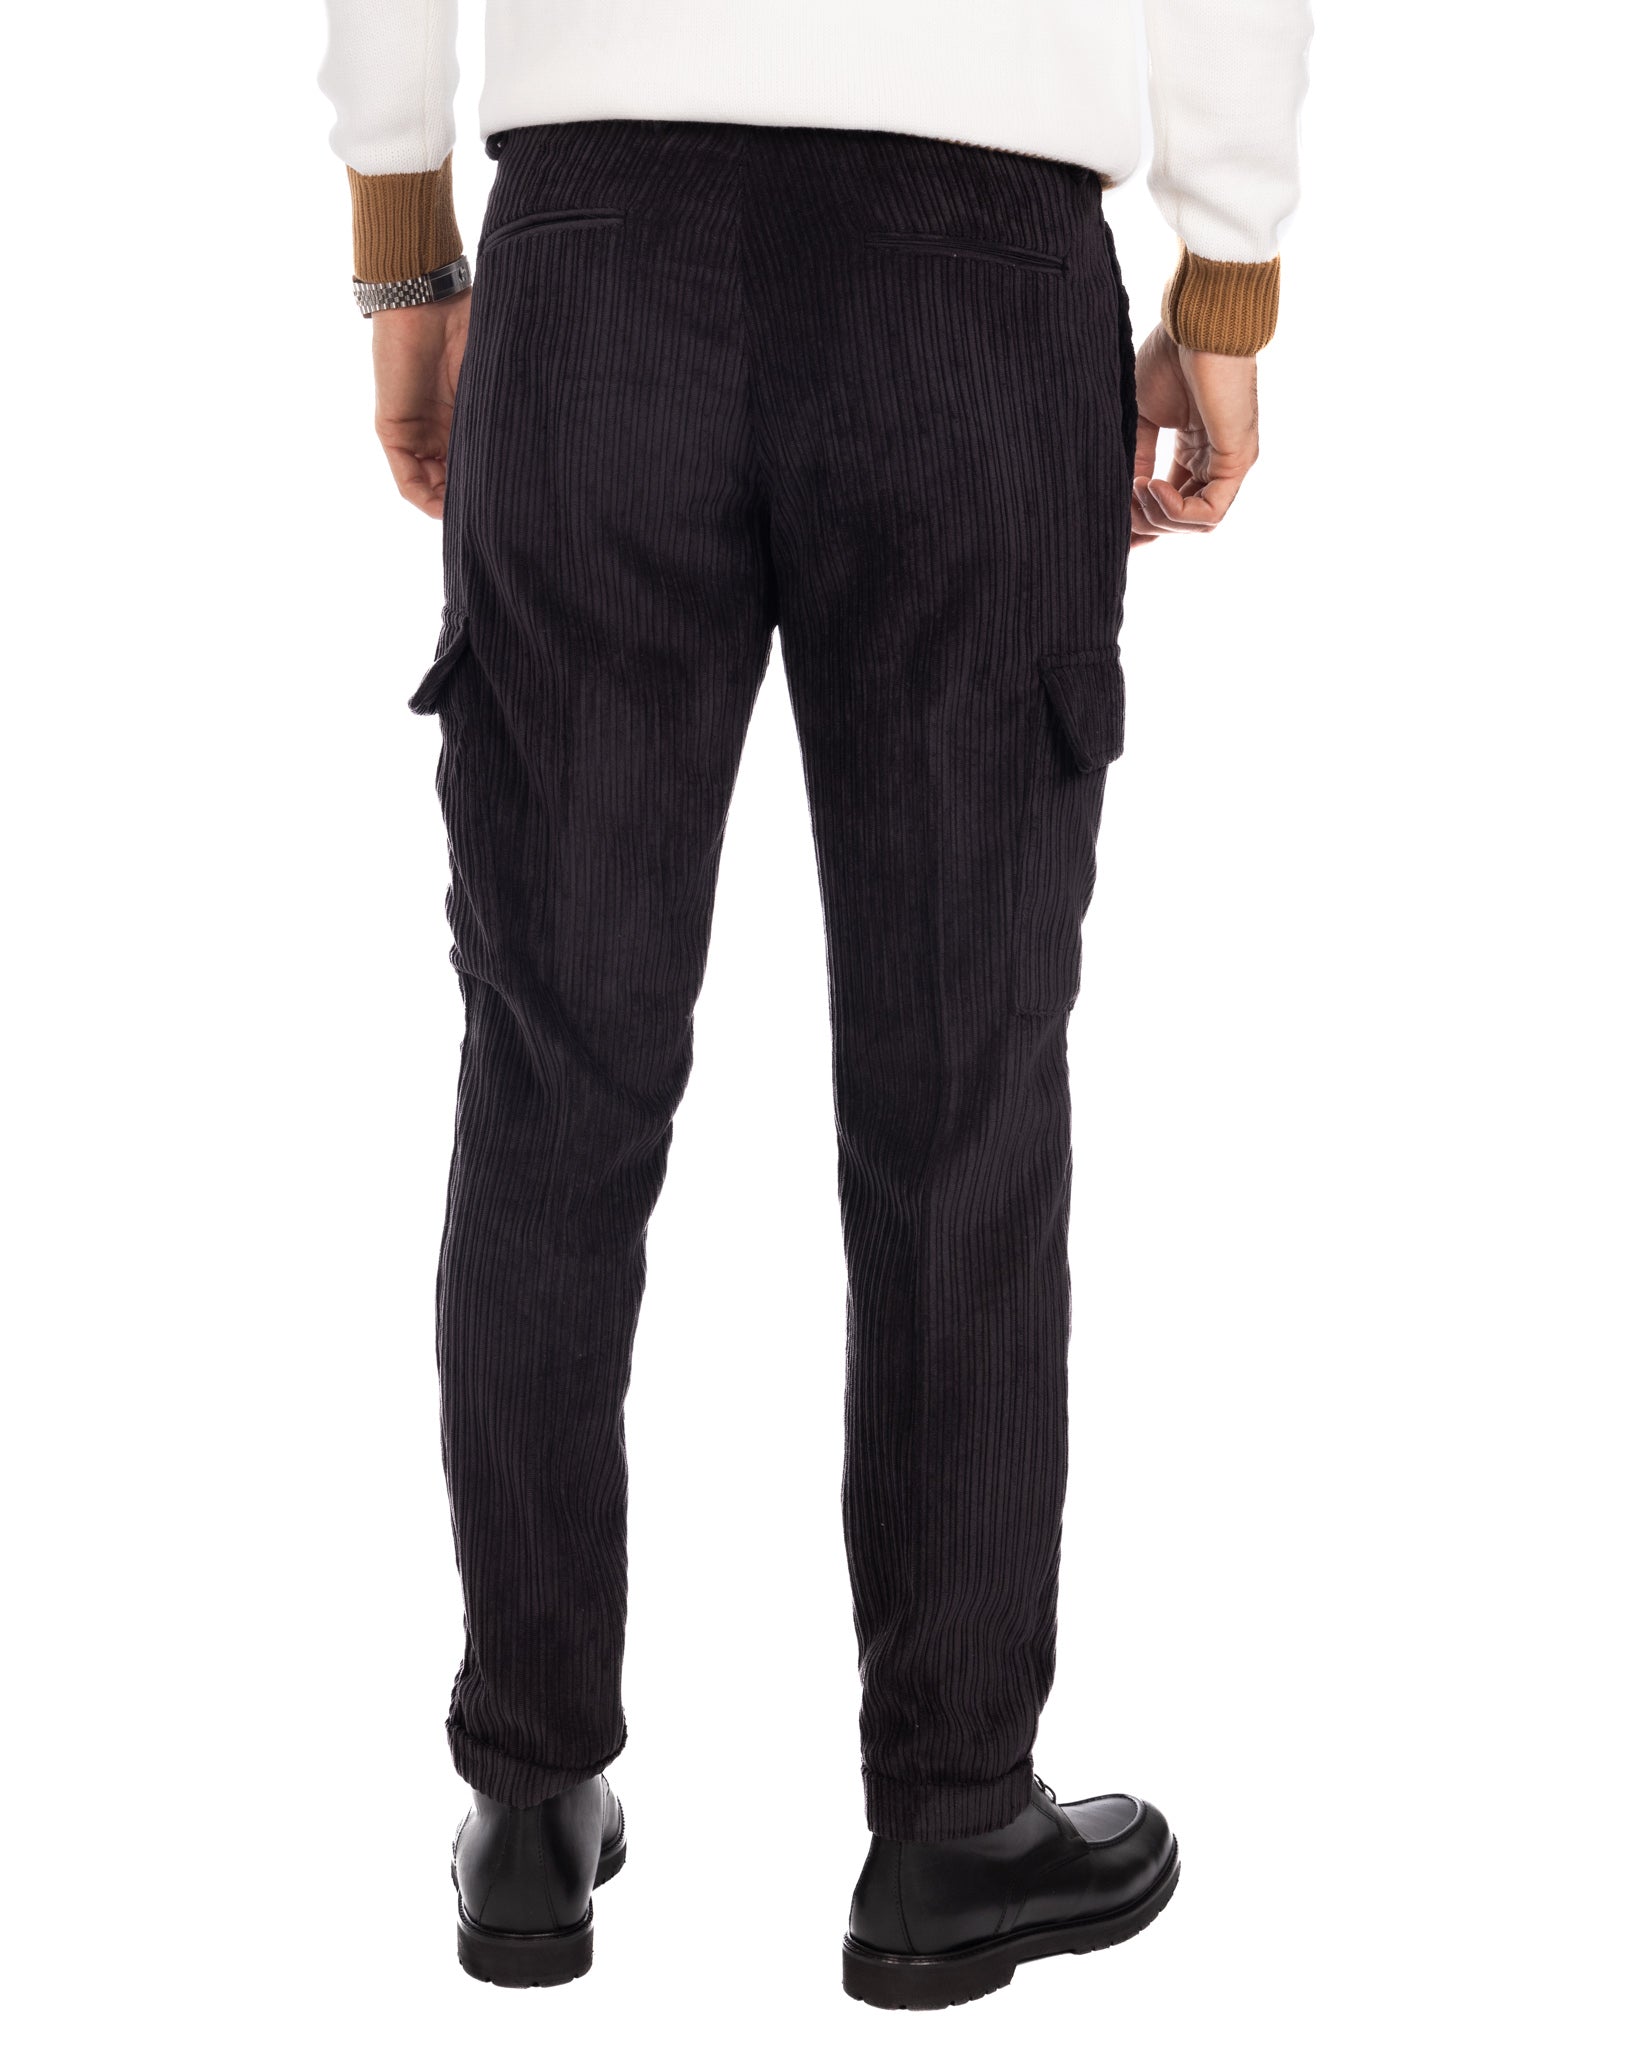 Amburgo - pantalone cargo in velluto nero